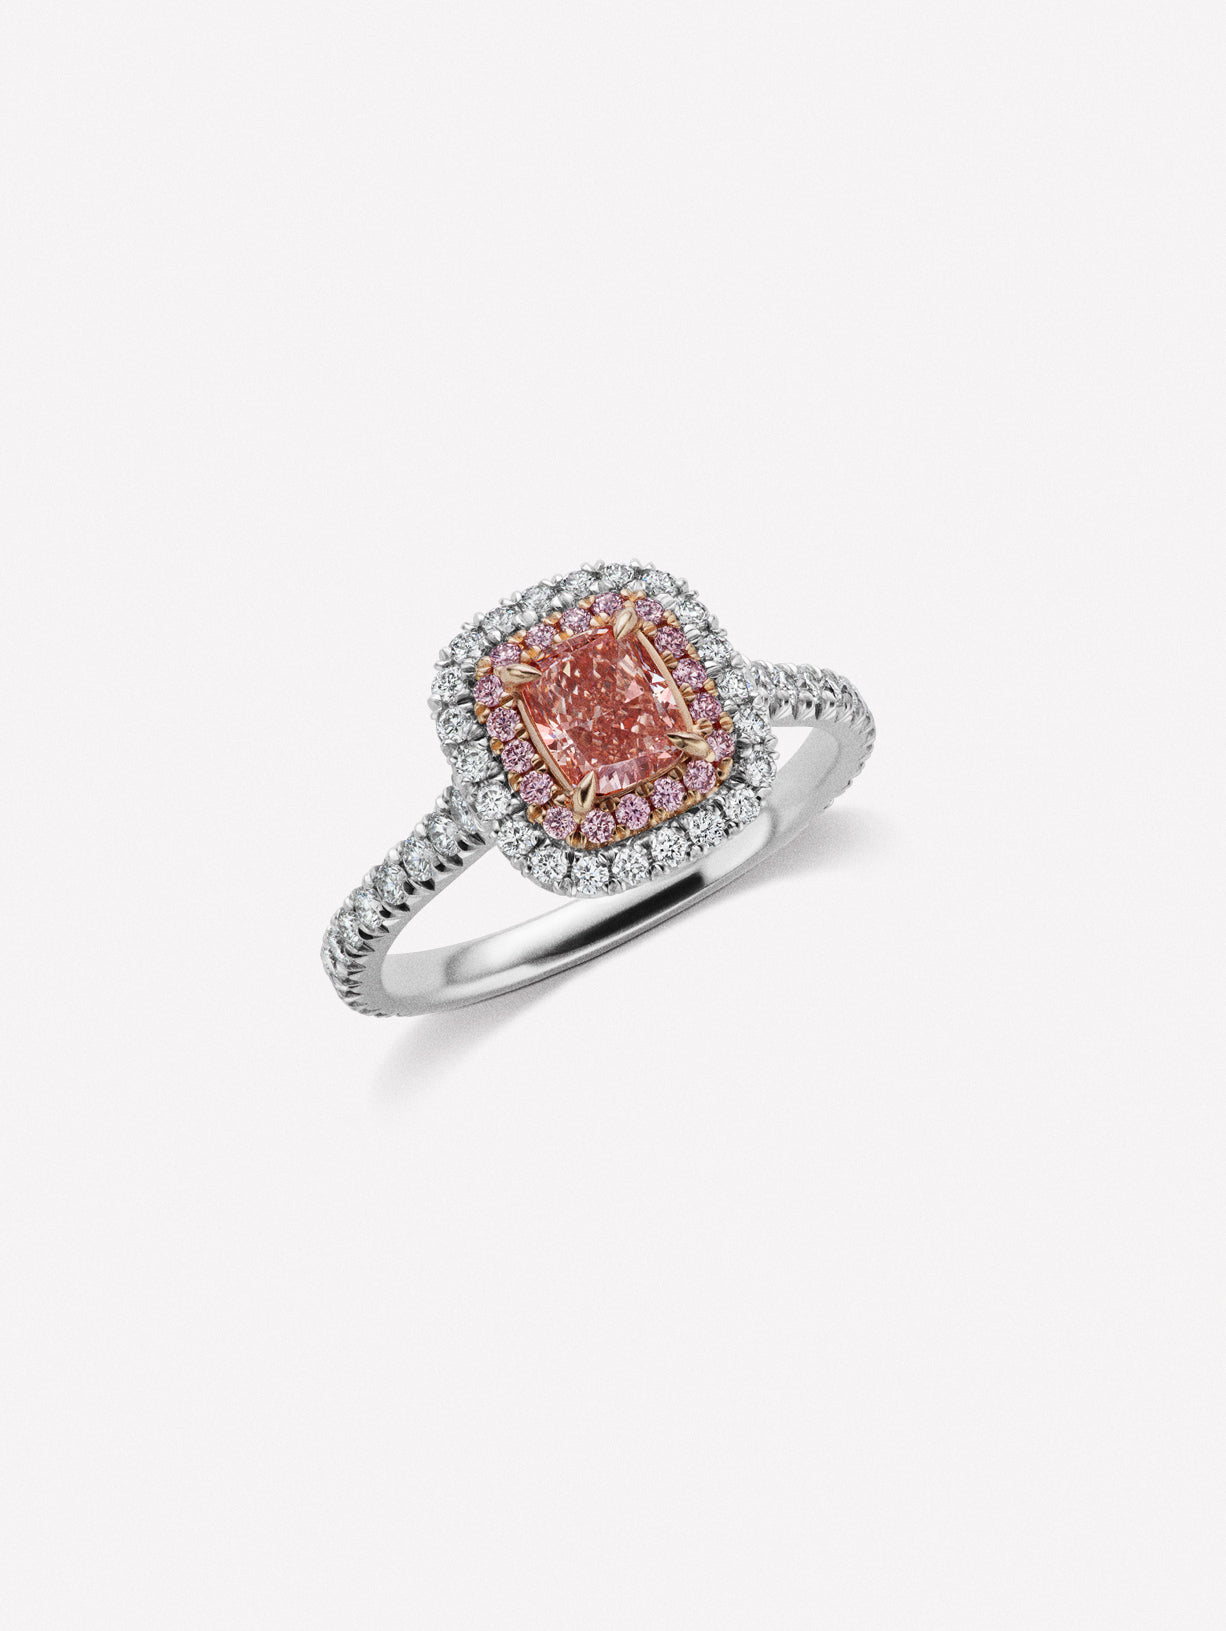 Cushion Pink Diamond Halo Engagement Ring